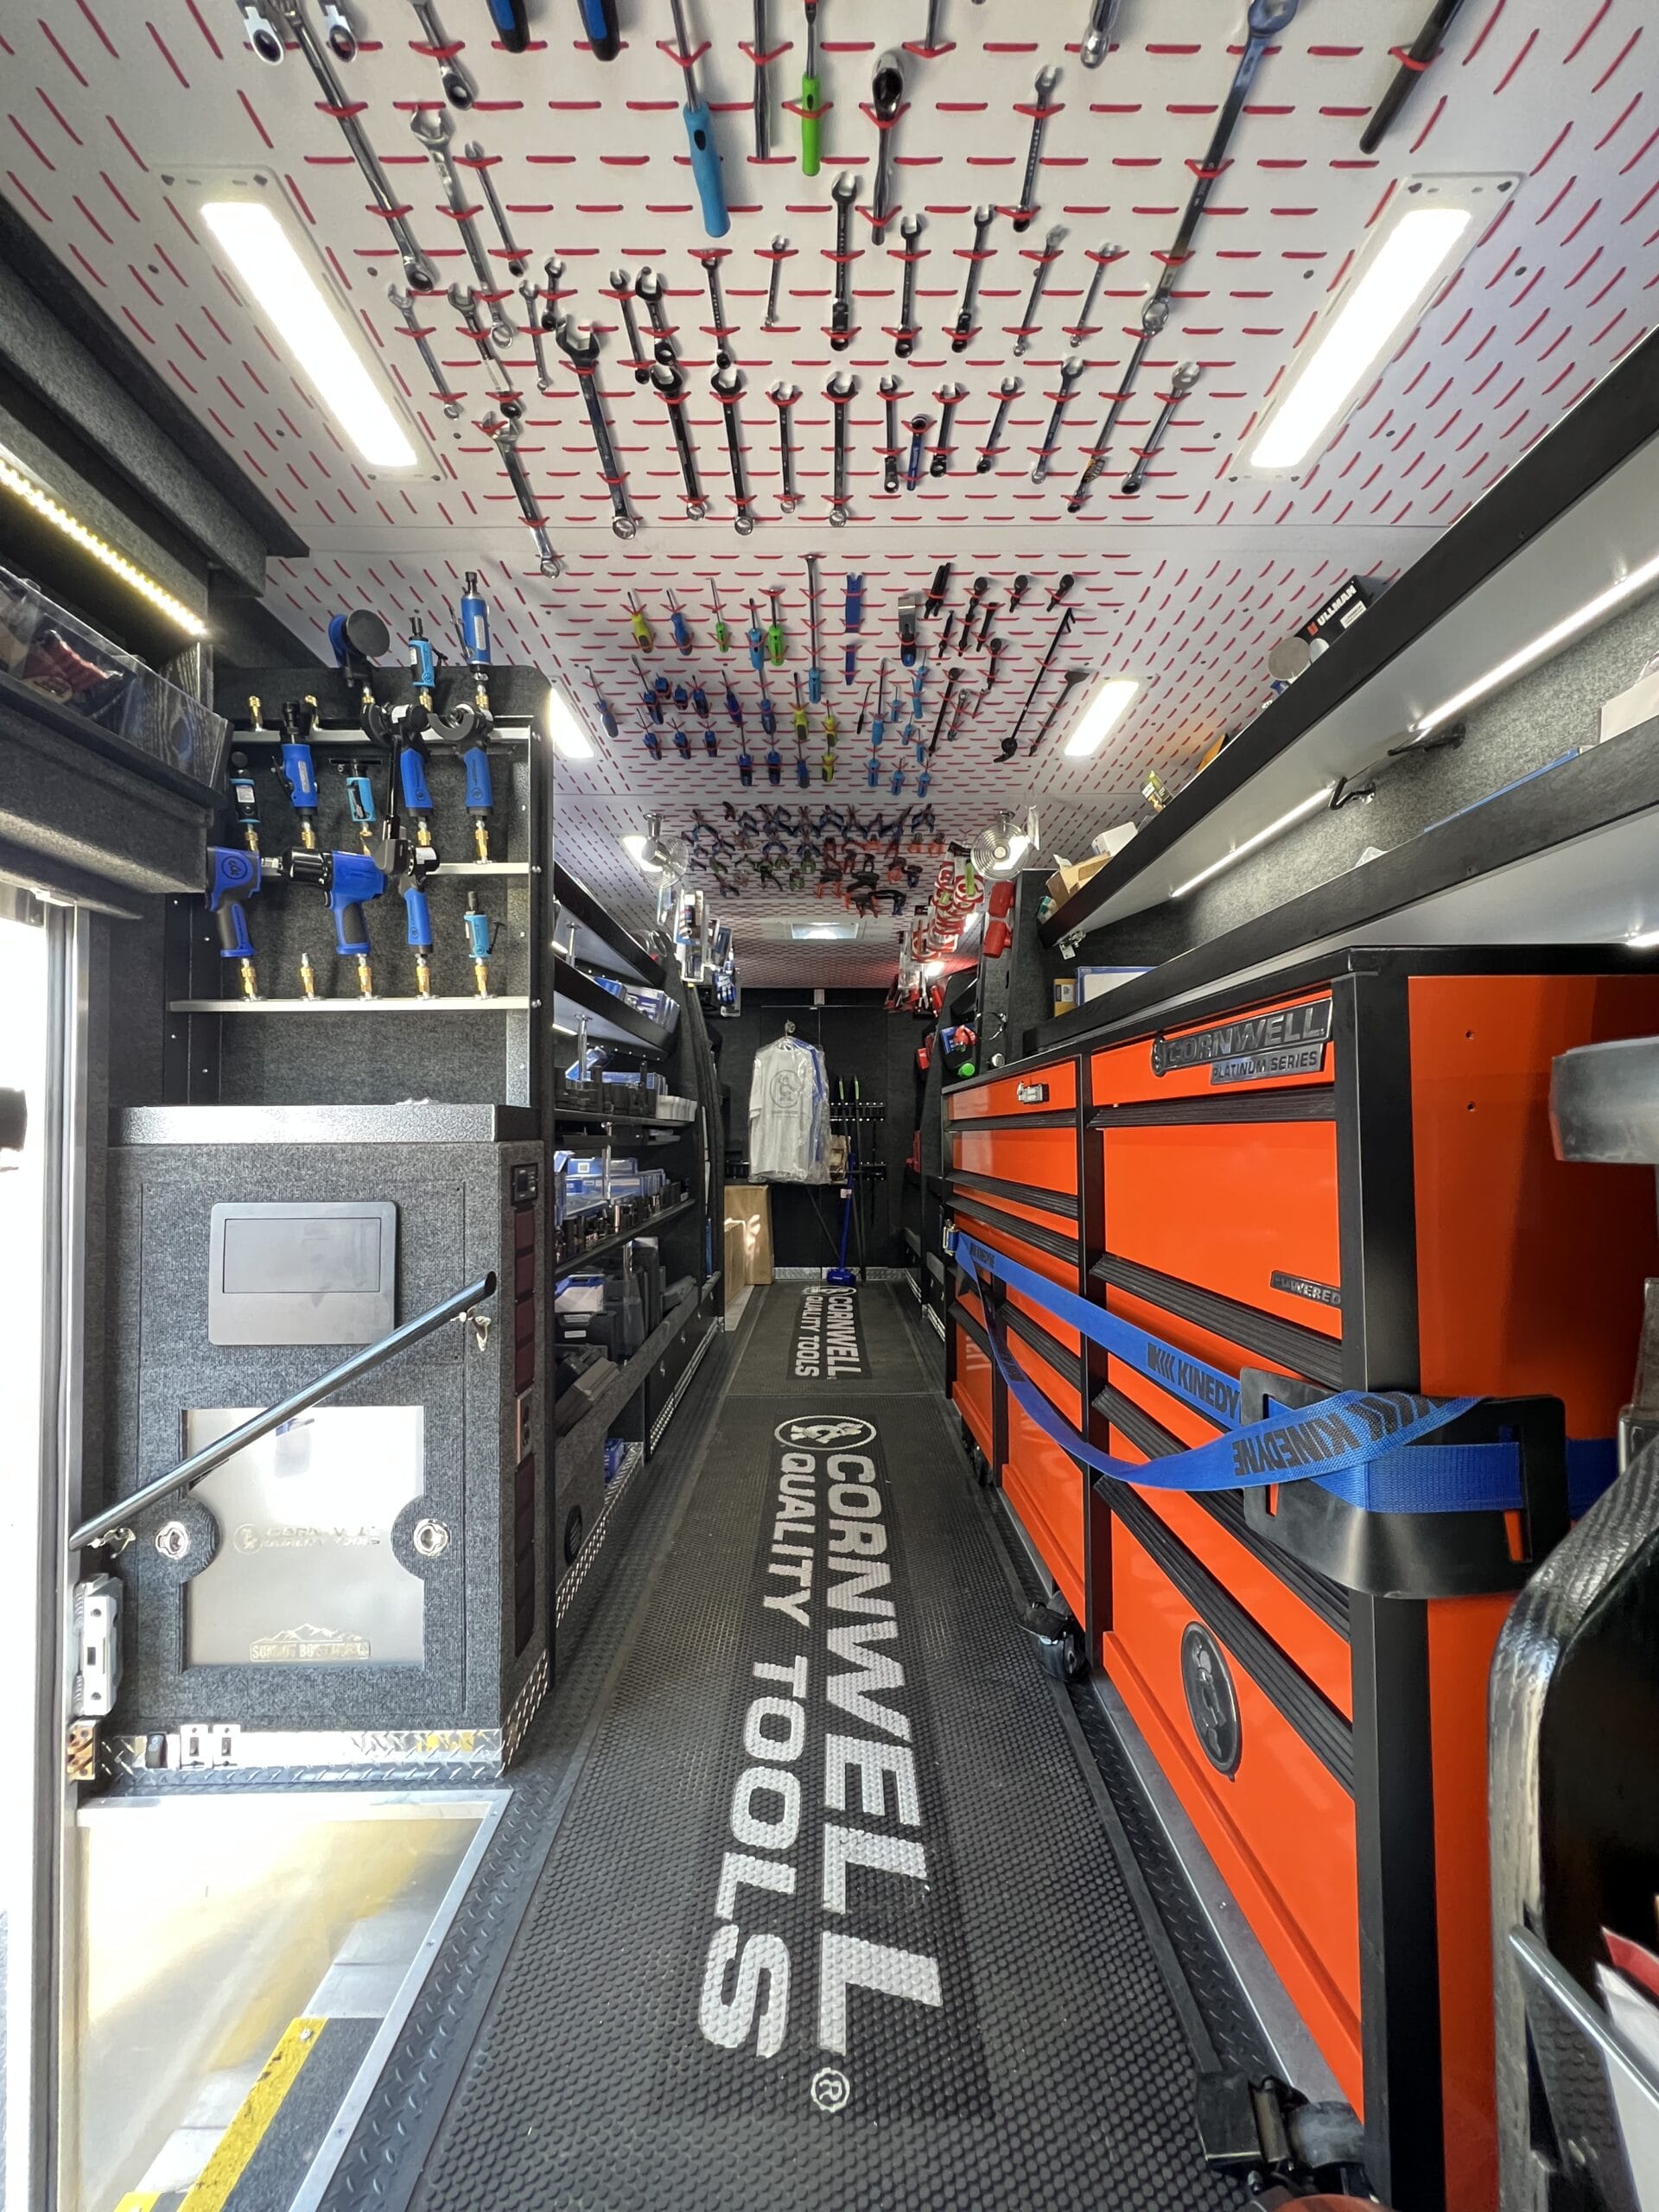 Summit Bodyworks custom cornwell tool truck 24' xavier t interior